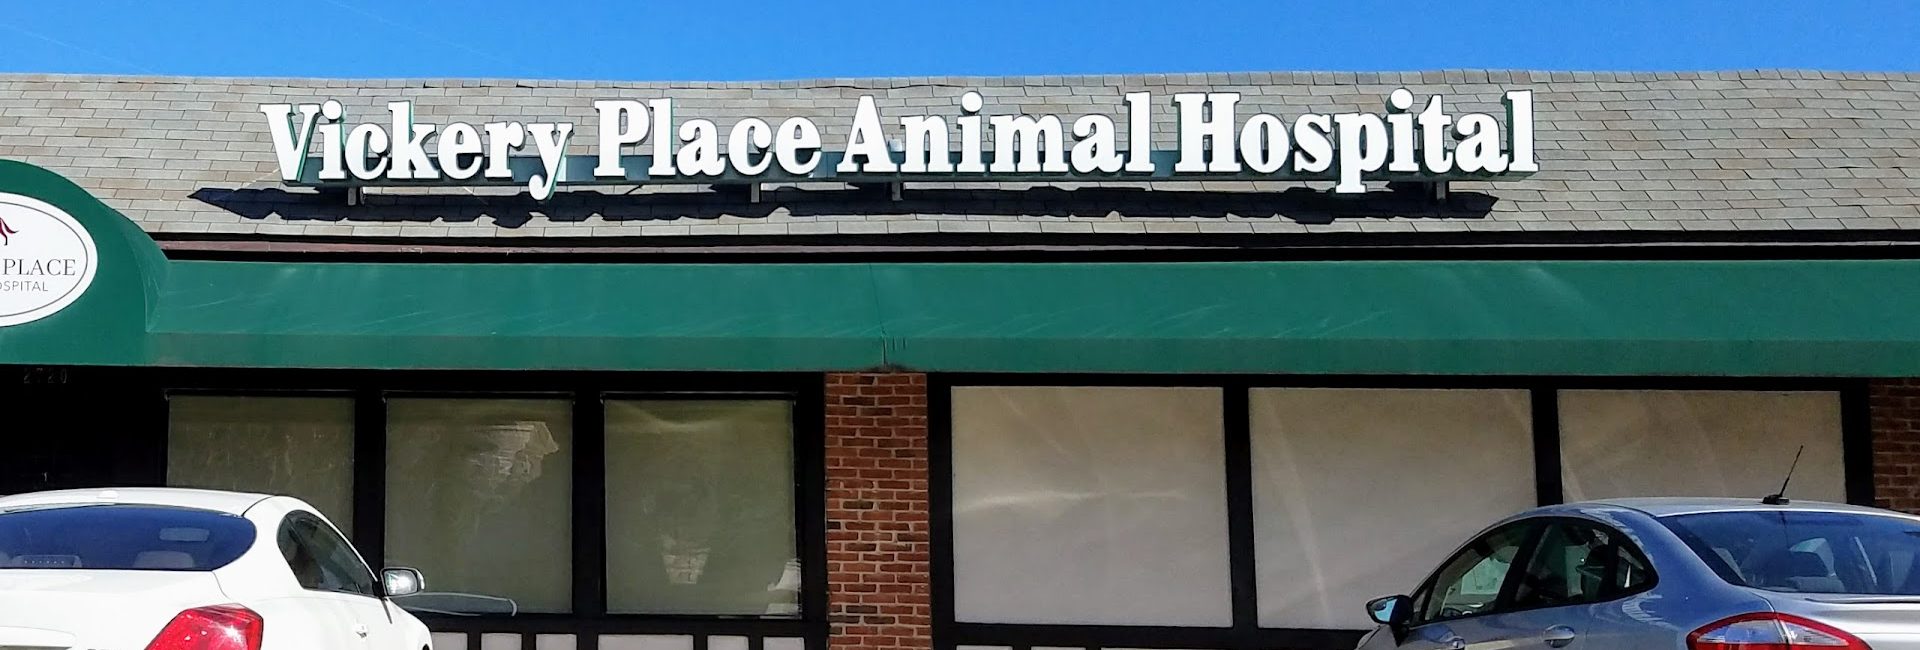 Vickery Place Animal Hospital 6